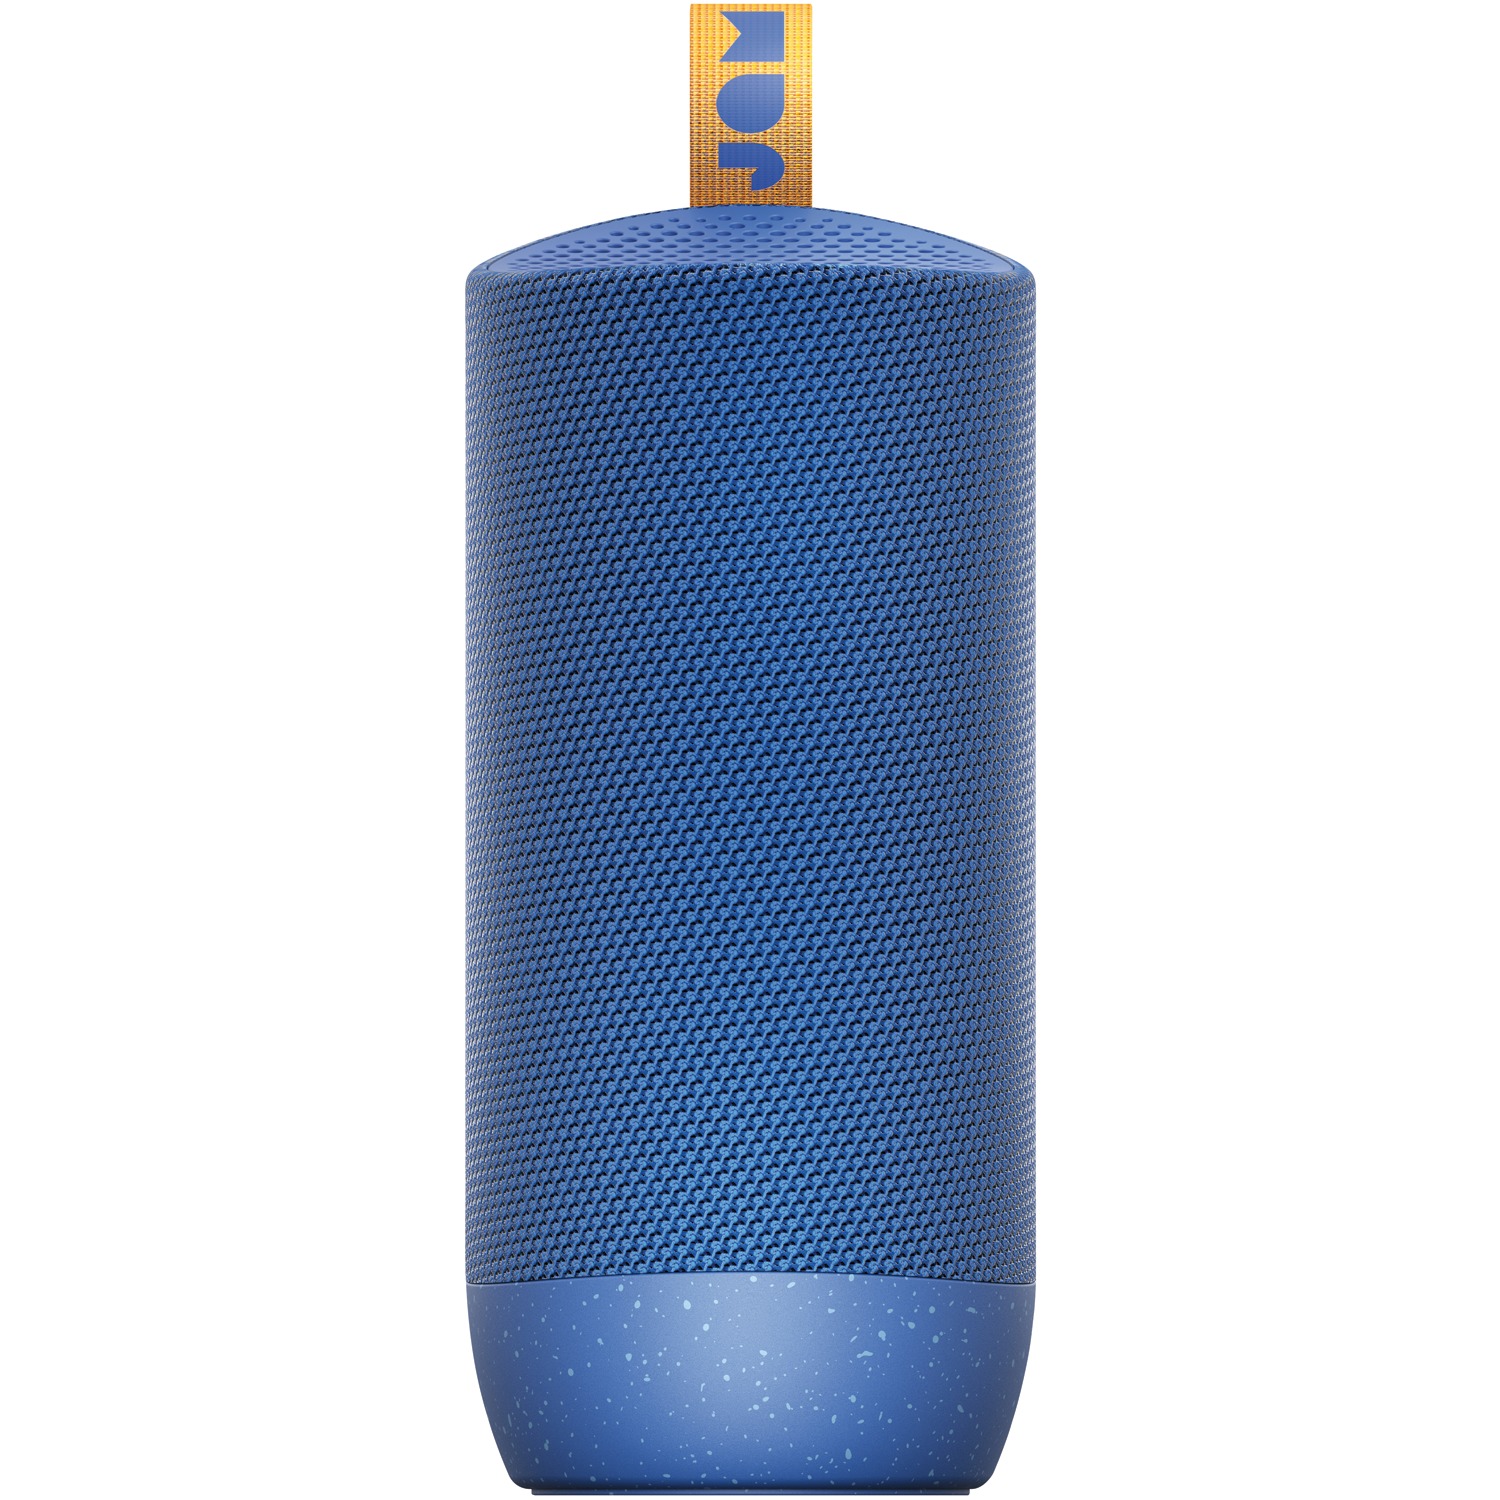 JAM HX-P606BL Zero Chill Bluetooth Speaker (Blue) - image 1 of 8